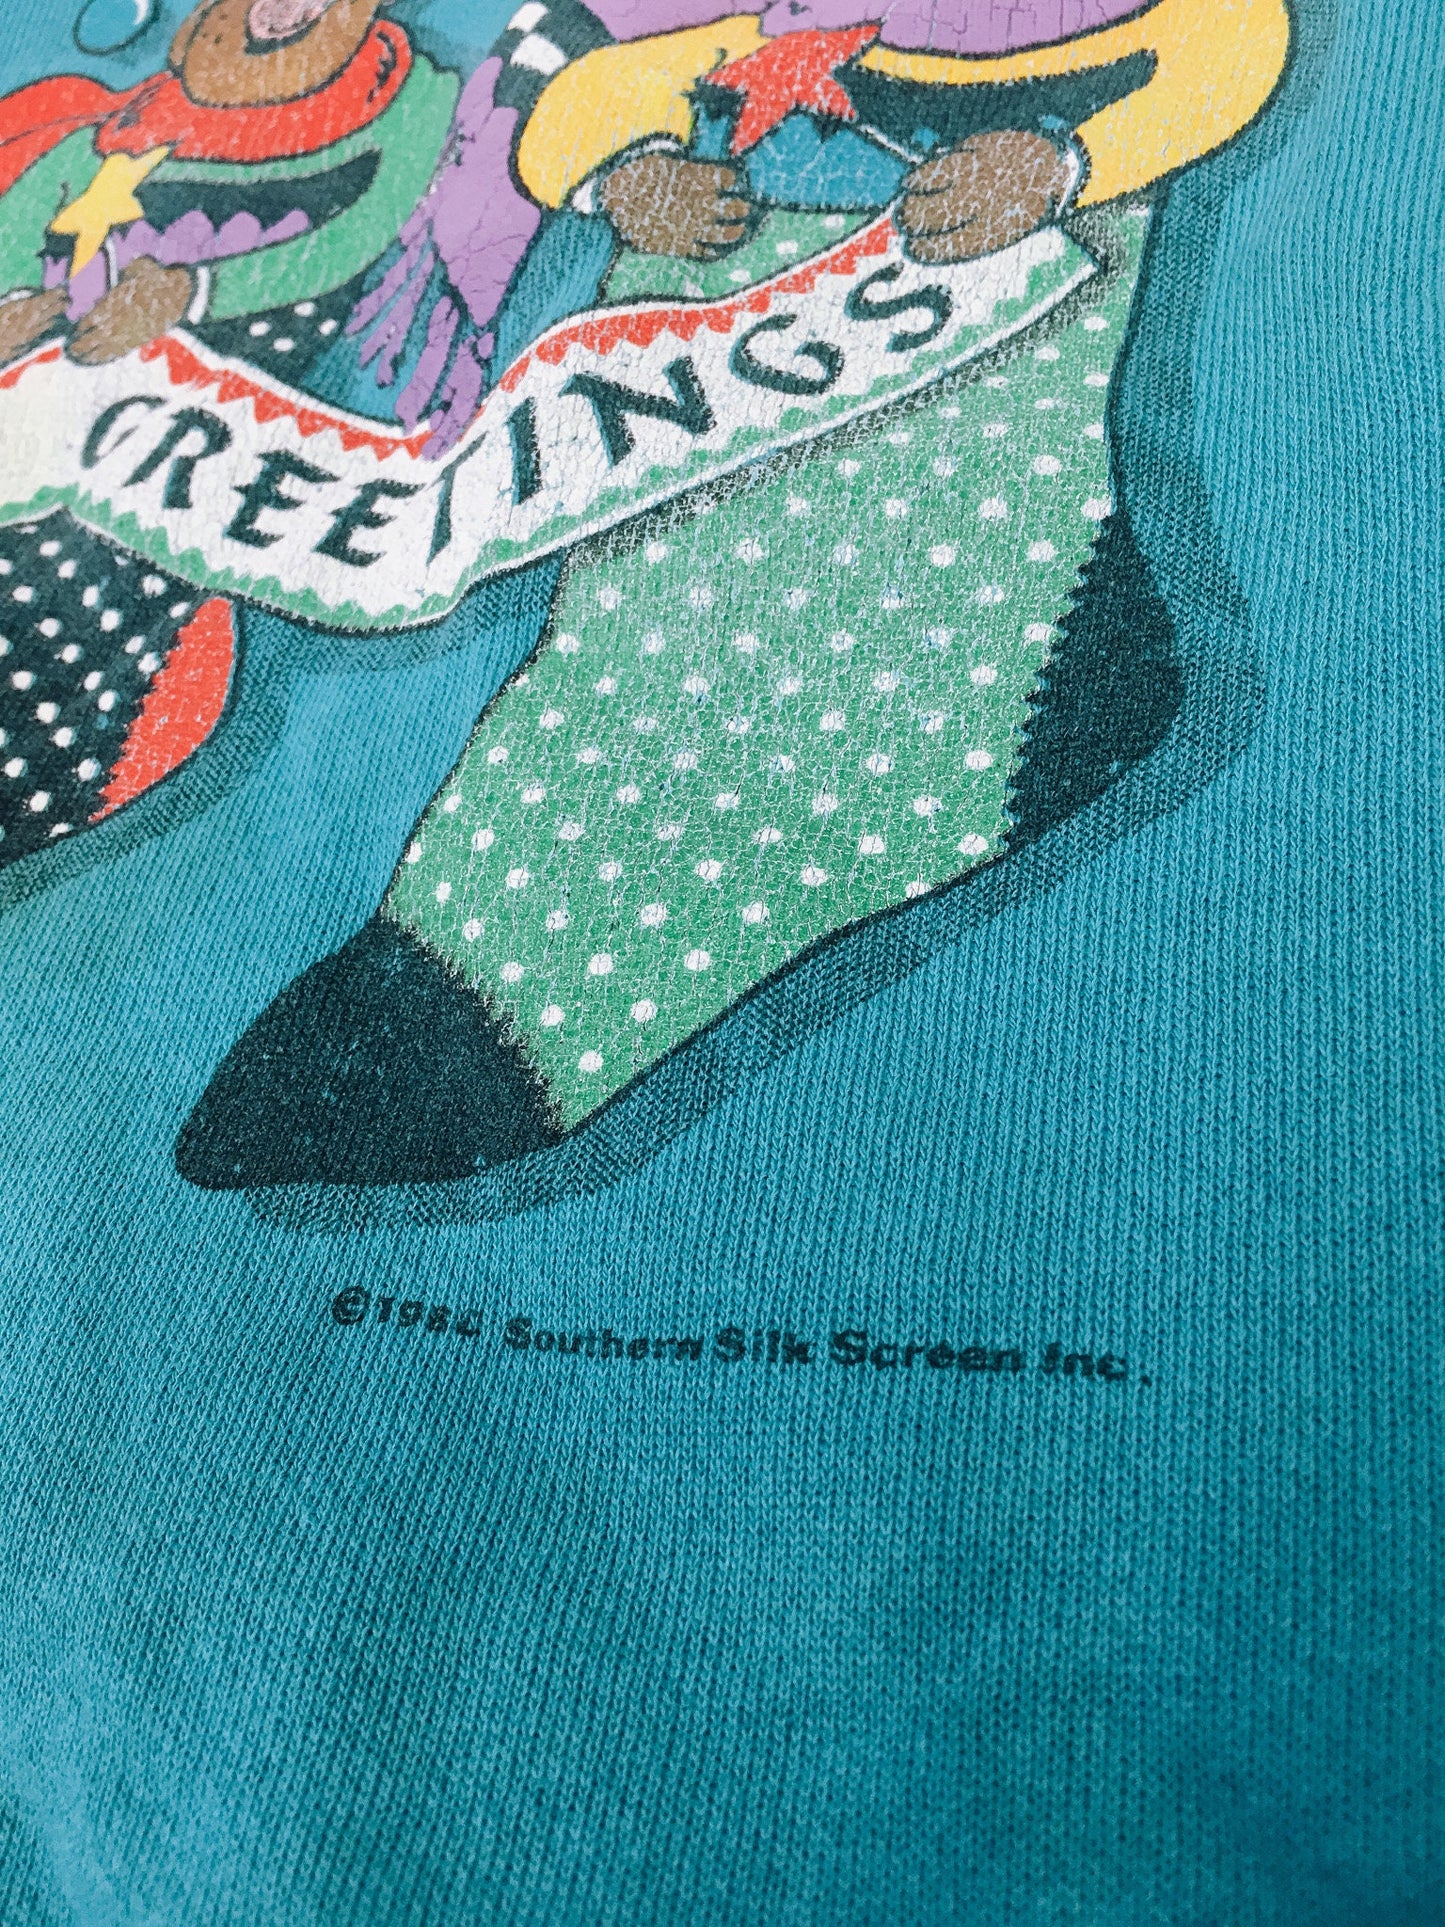 Vintage 1980 Hanes "Seasons Greetings" Teal Crewneck Sweater, Vintage 80s Holiday Sweatshirt, Made in USA, Sz. XXL